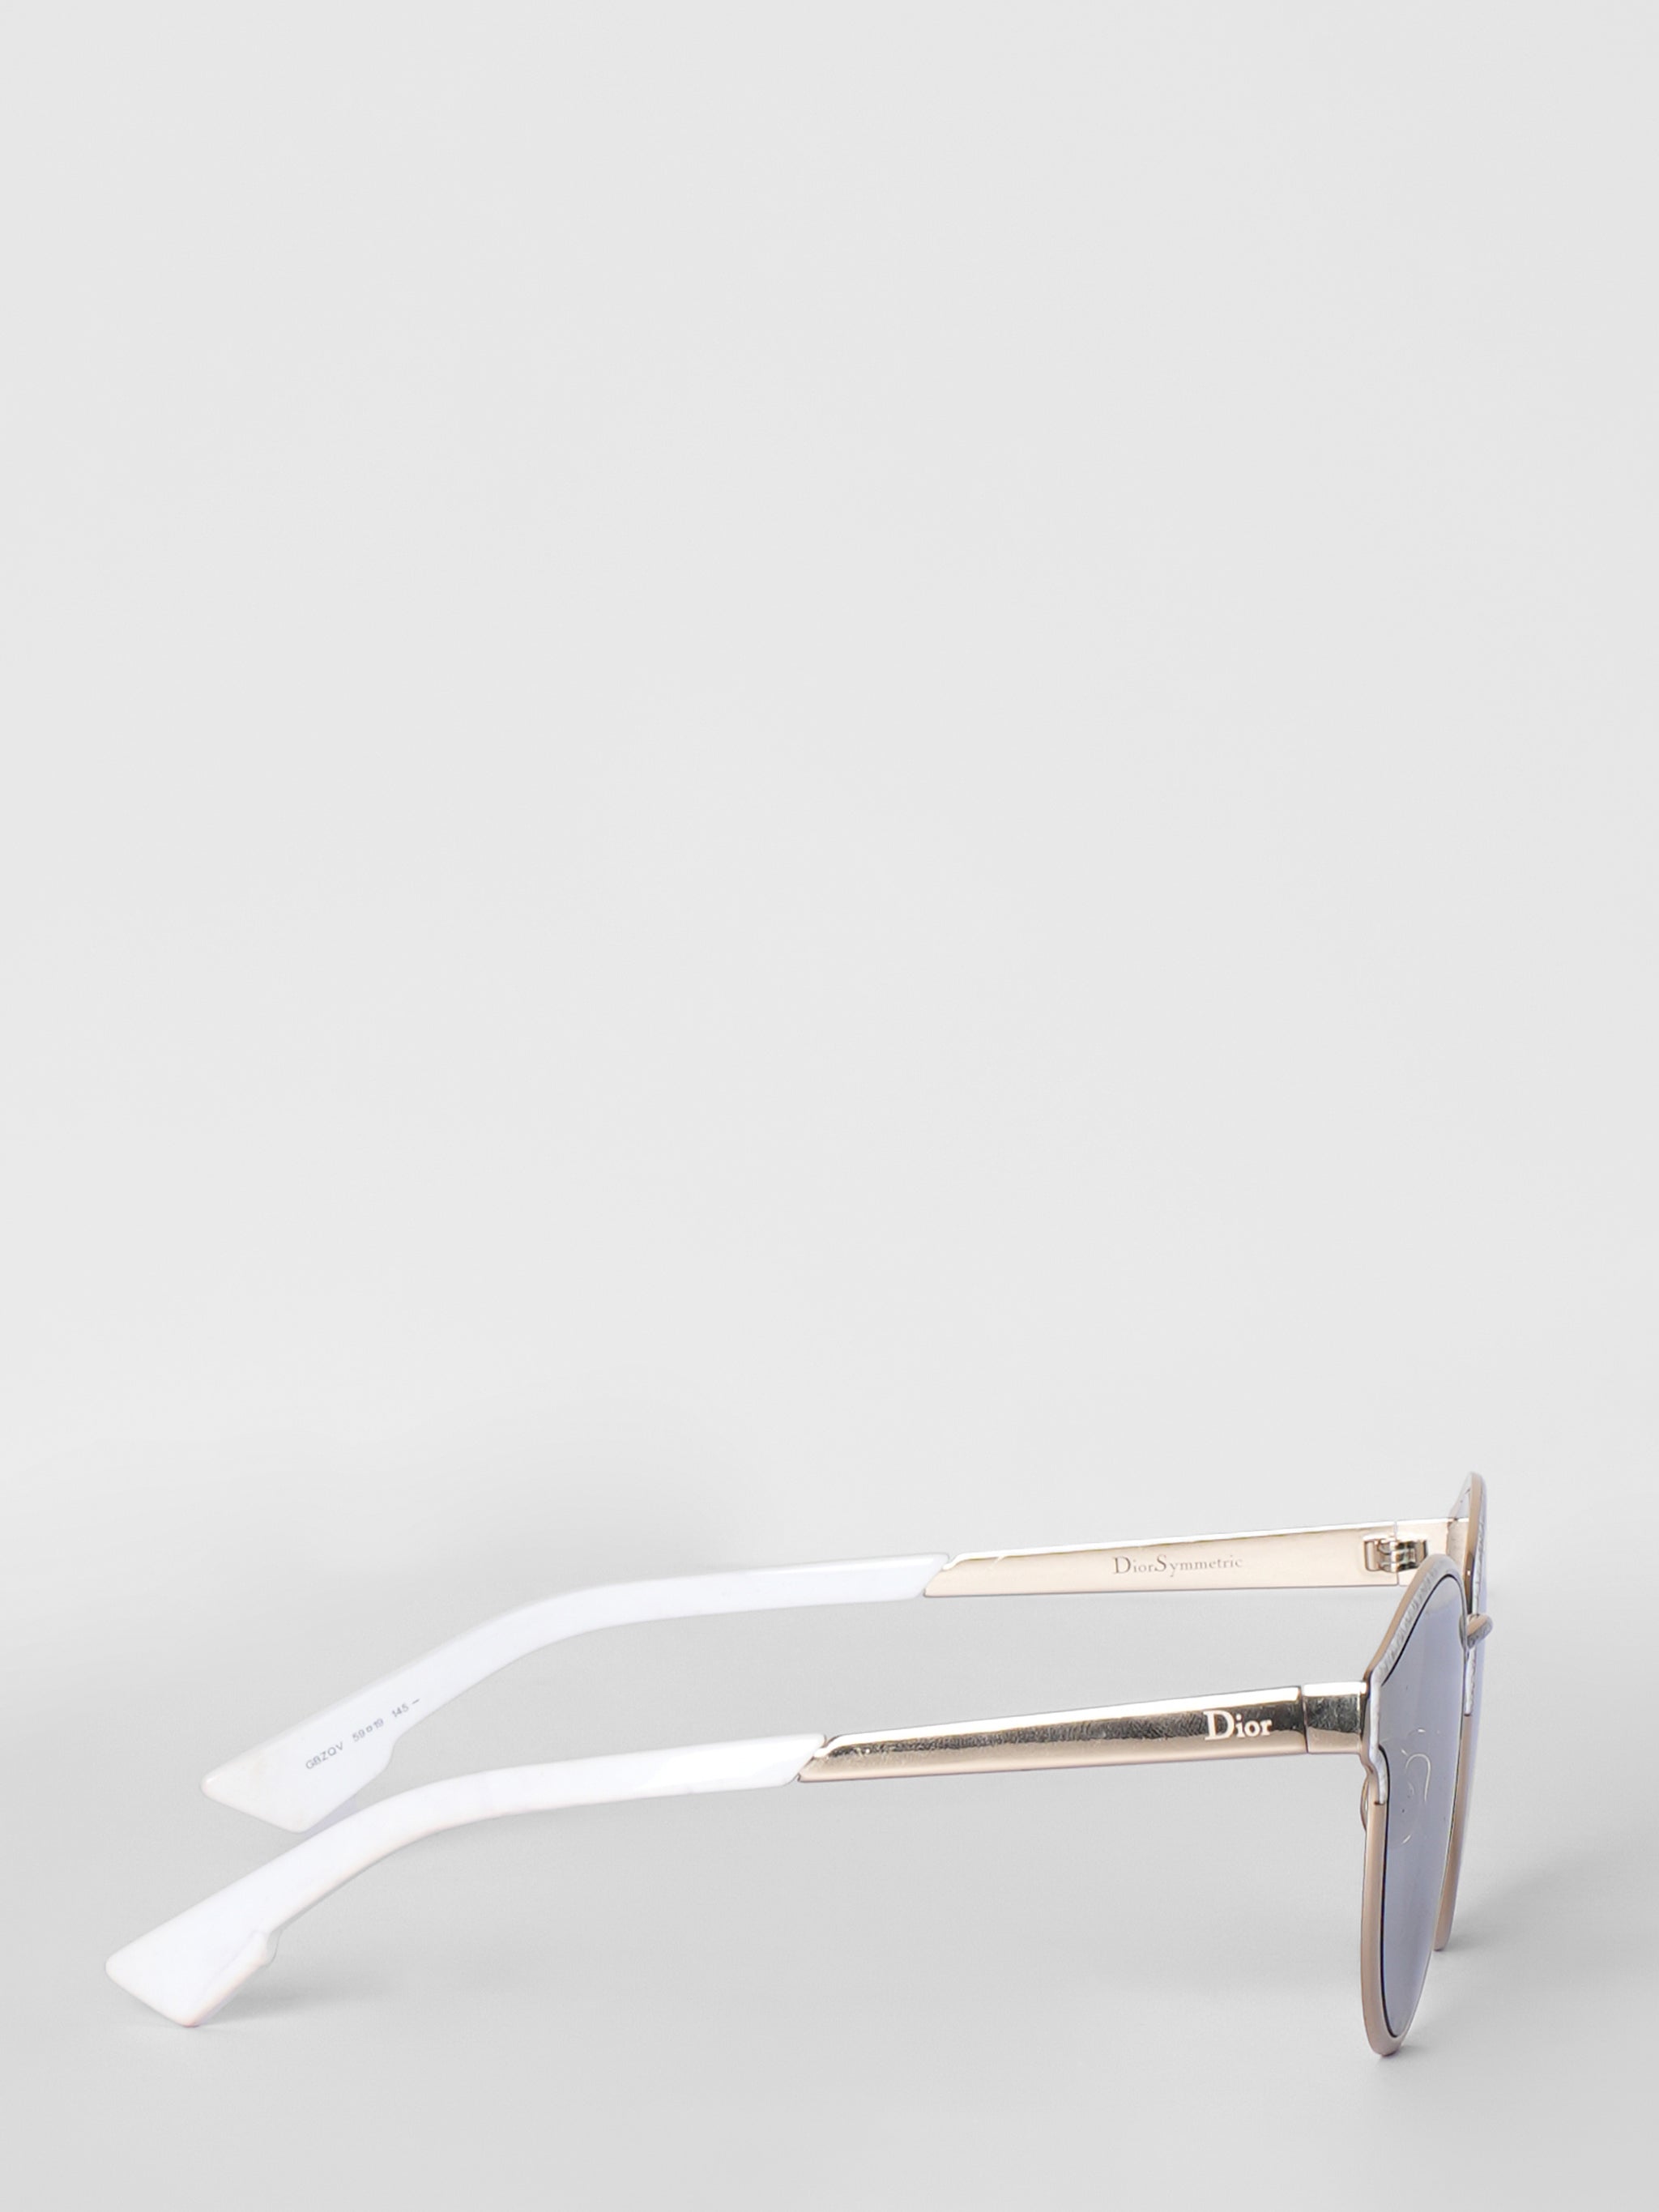 New Chrstian Dior Light Gold Geometric Sunglasses